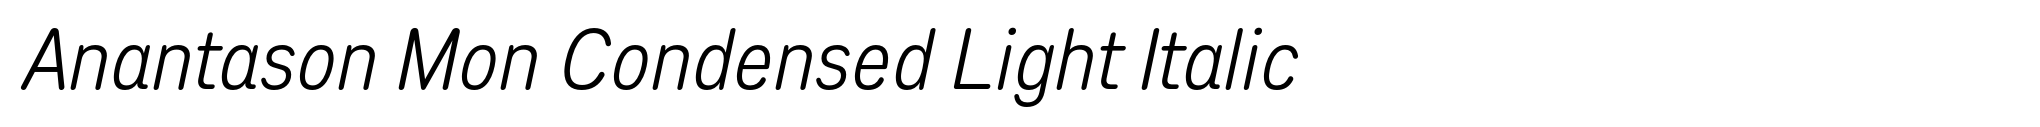 Anantason Mon Condensed Light Italic image